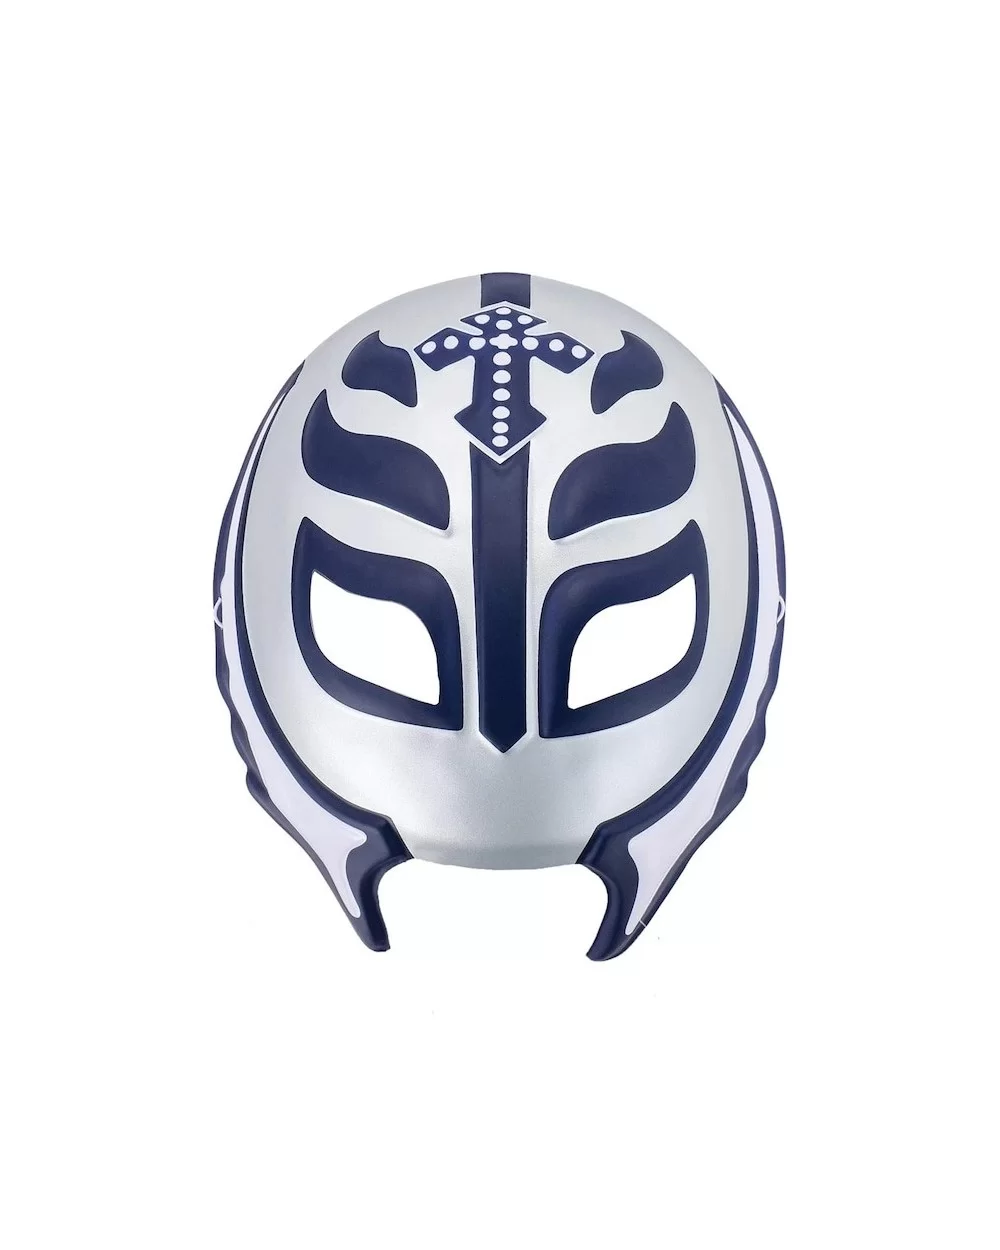 Rey Mysterio Silver/Navy Plastic Mask $2.46 Apparel